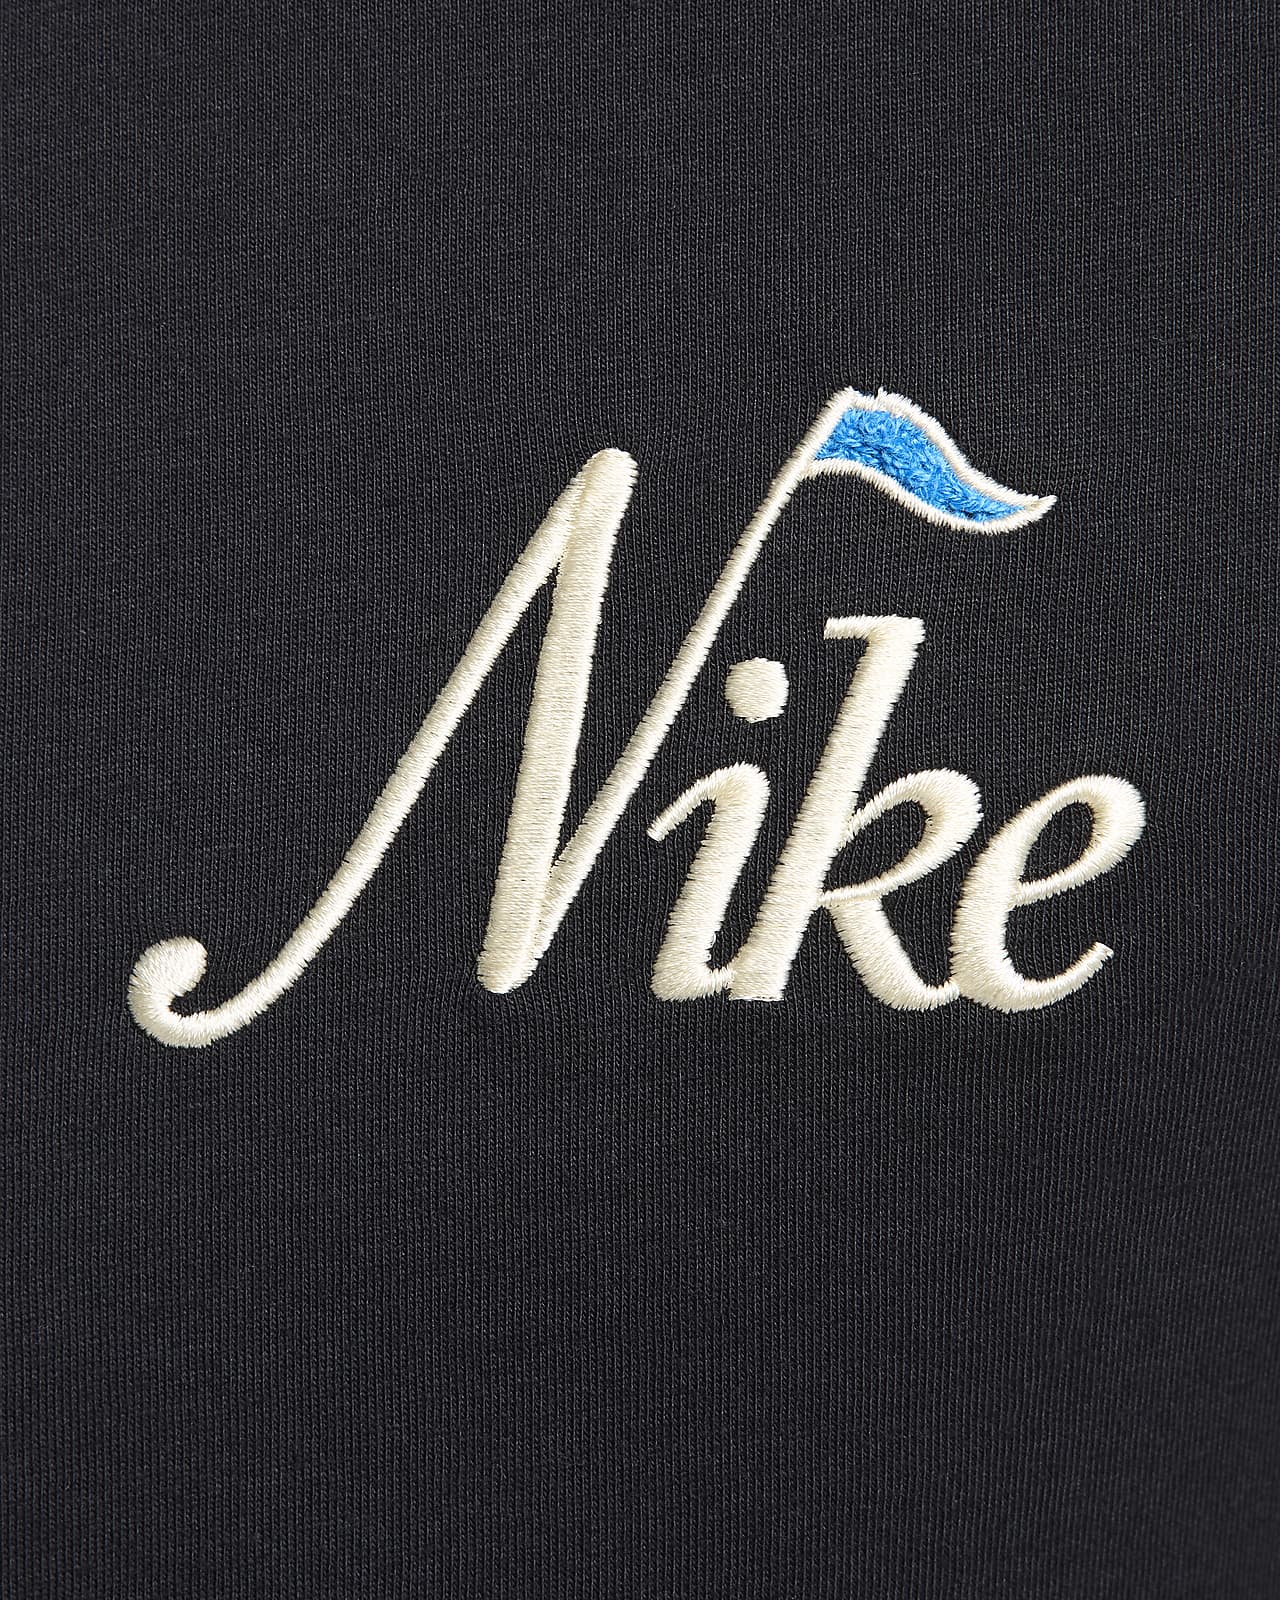 NIKE公式】ナイキ メンズ ゴルフ Tシャツ.オンラインストア (通販サイト)